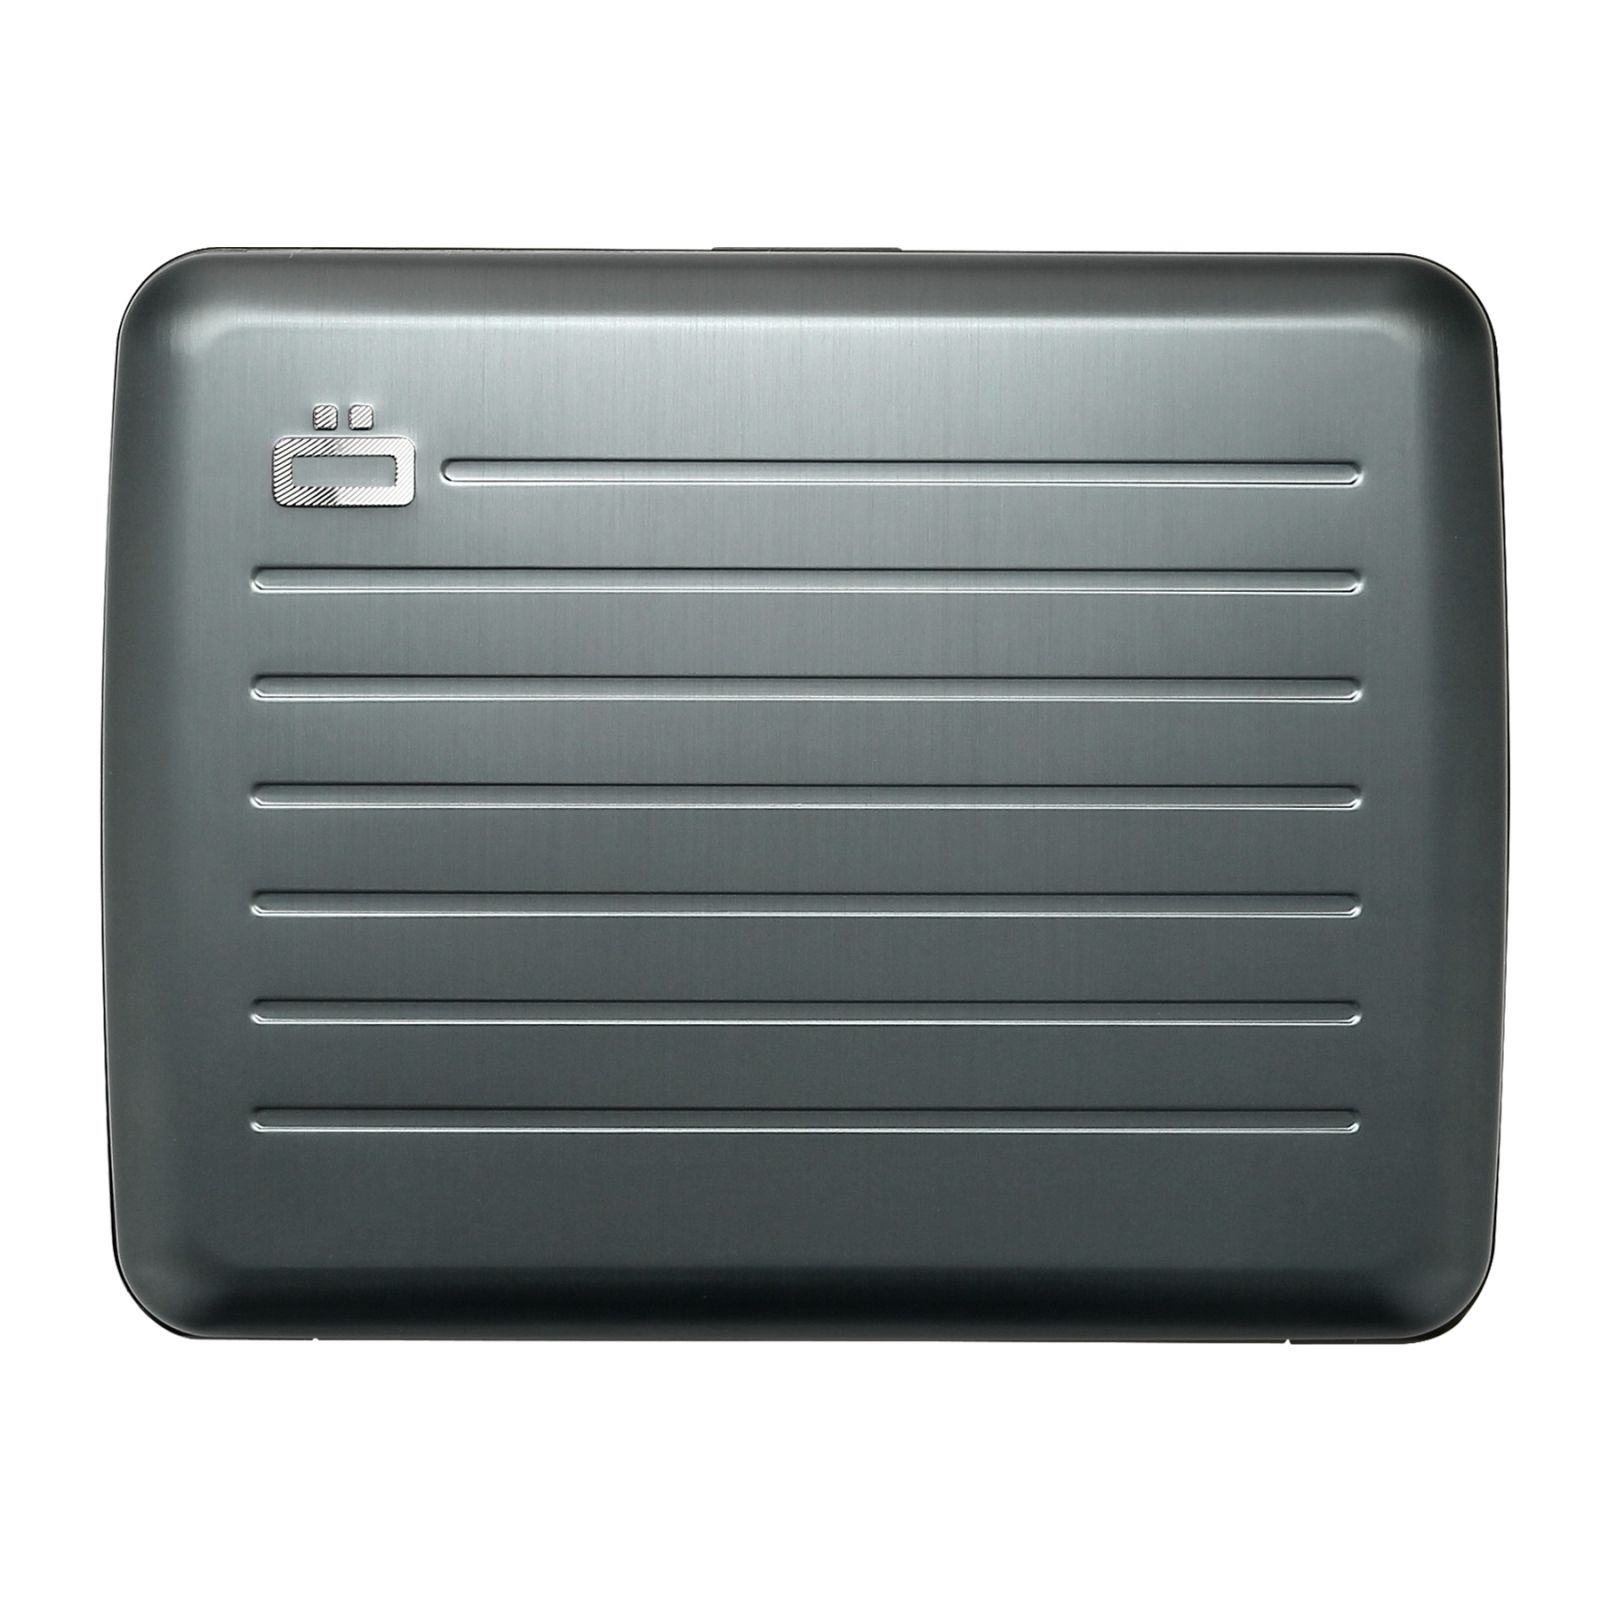 OGON Aluminum Wallet Smart Case V2.0 Large - Platunium